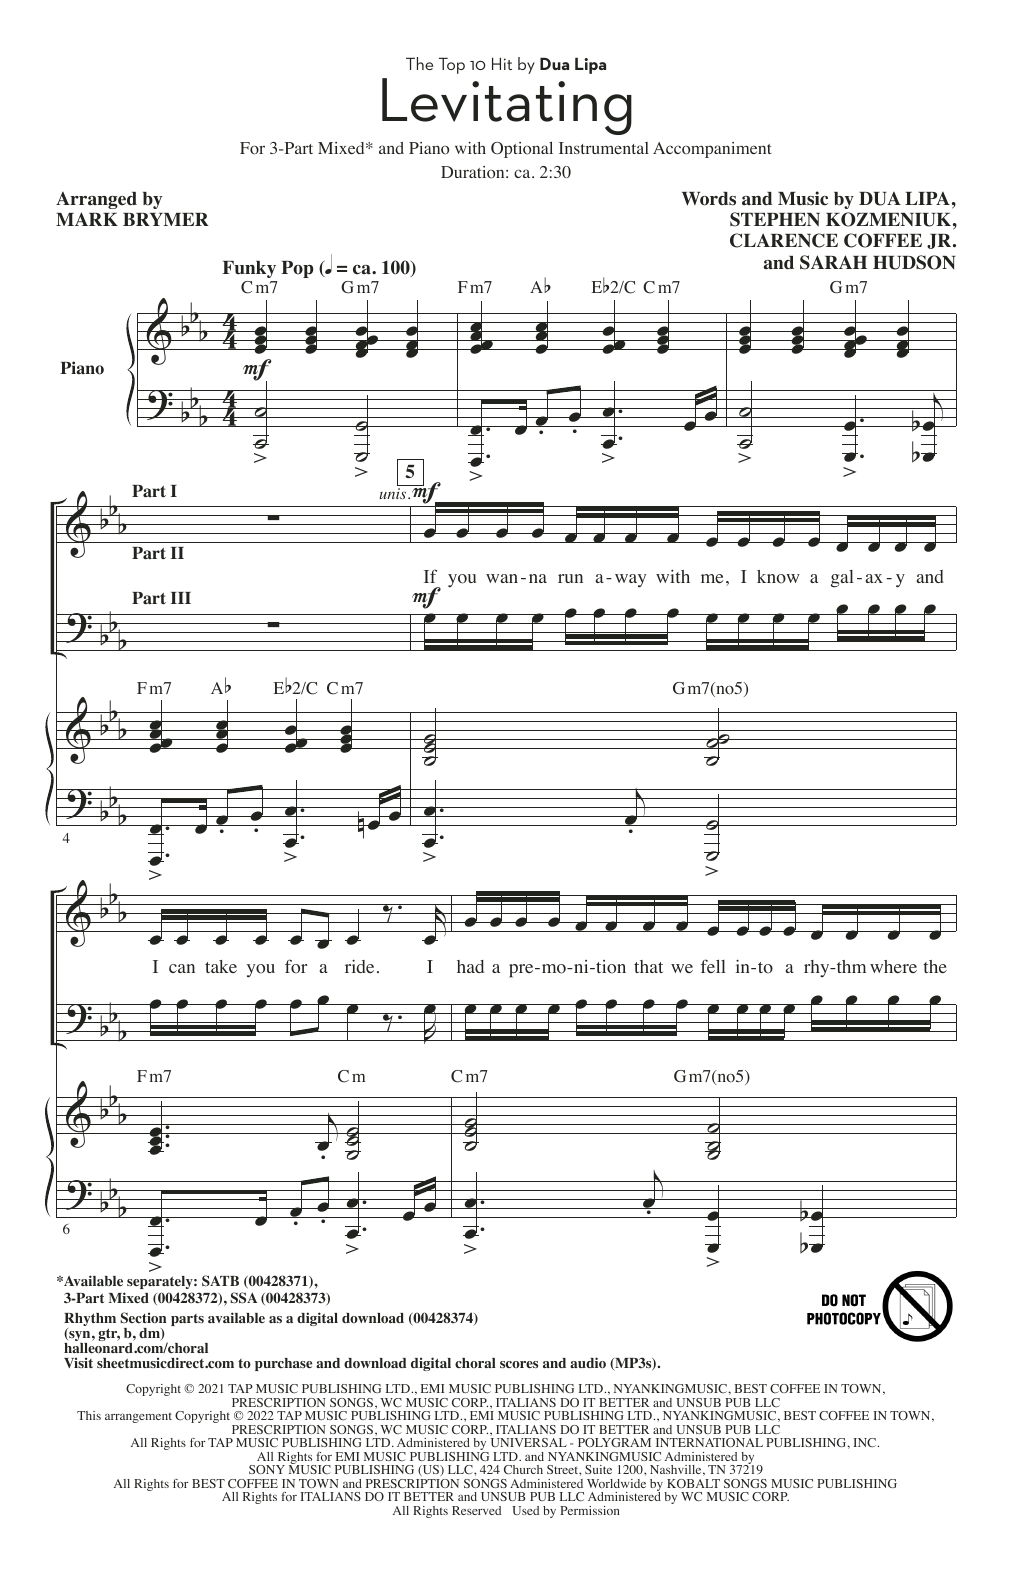 Dua Lipa Levitating (arr. Mark Brymer) Sheet Music Notes & Chords for SSA Choir - Download or Print PDF